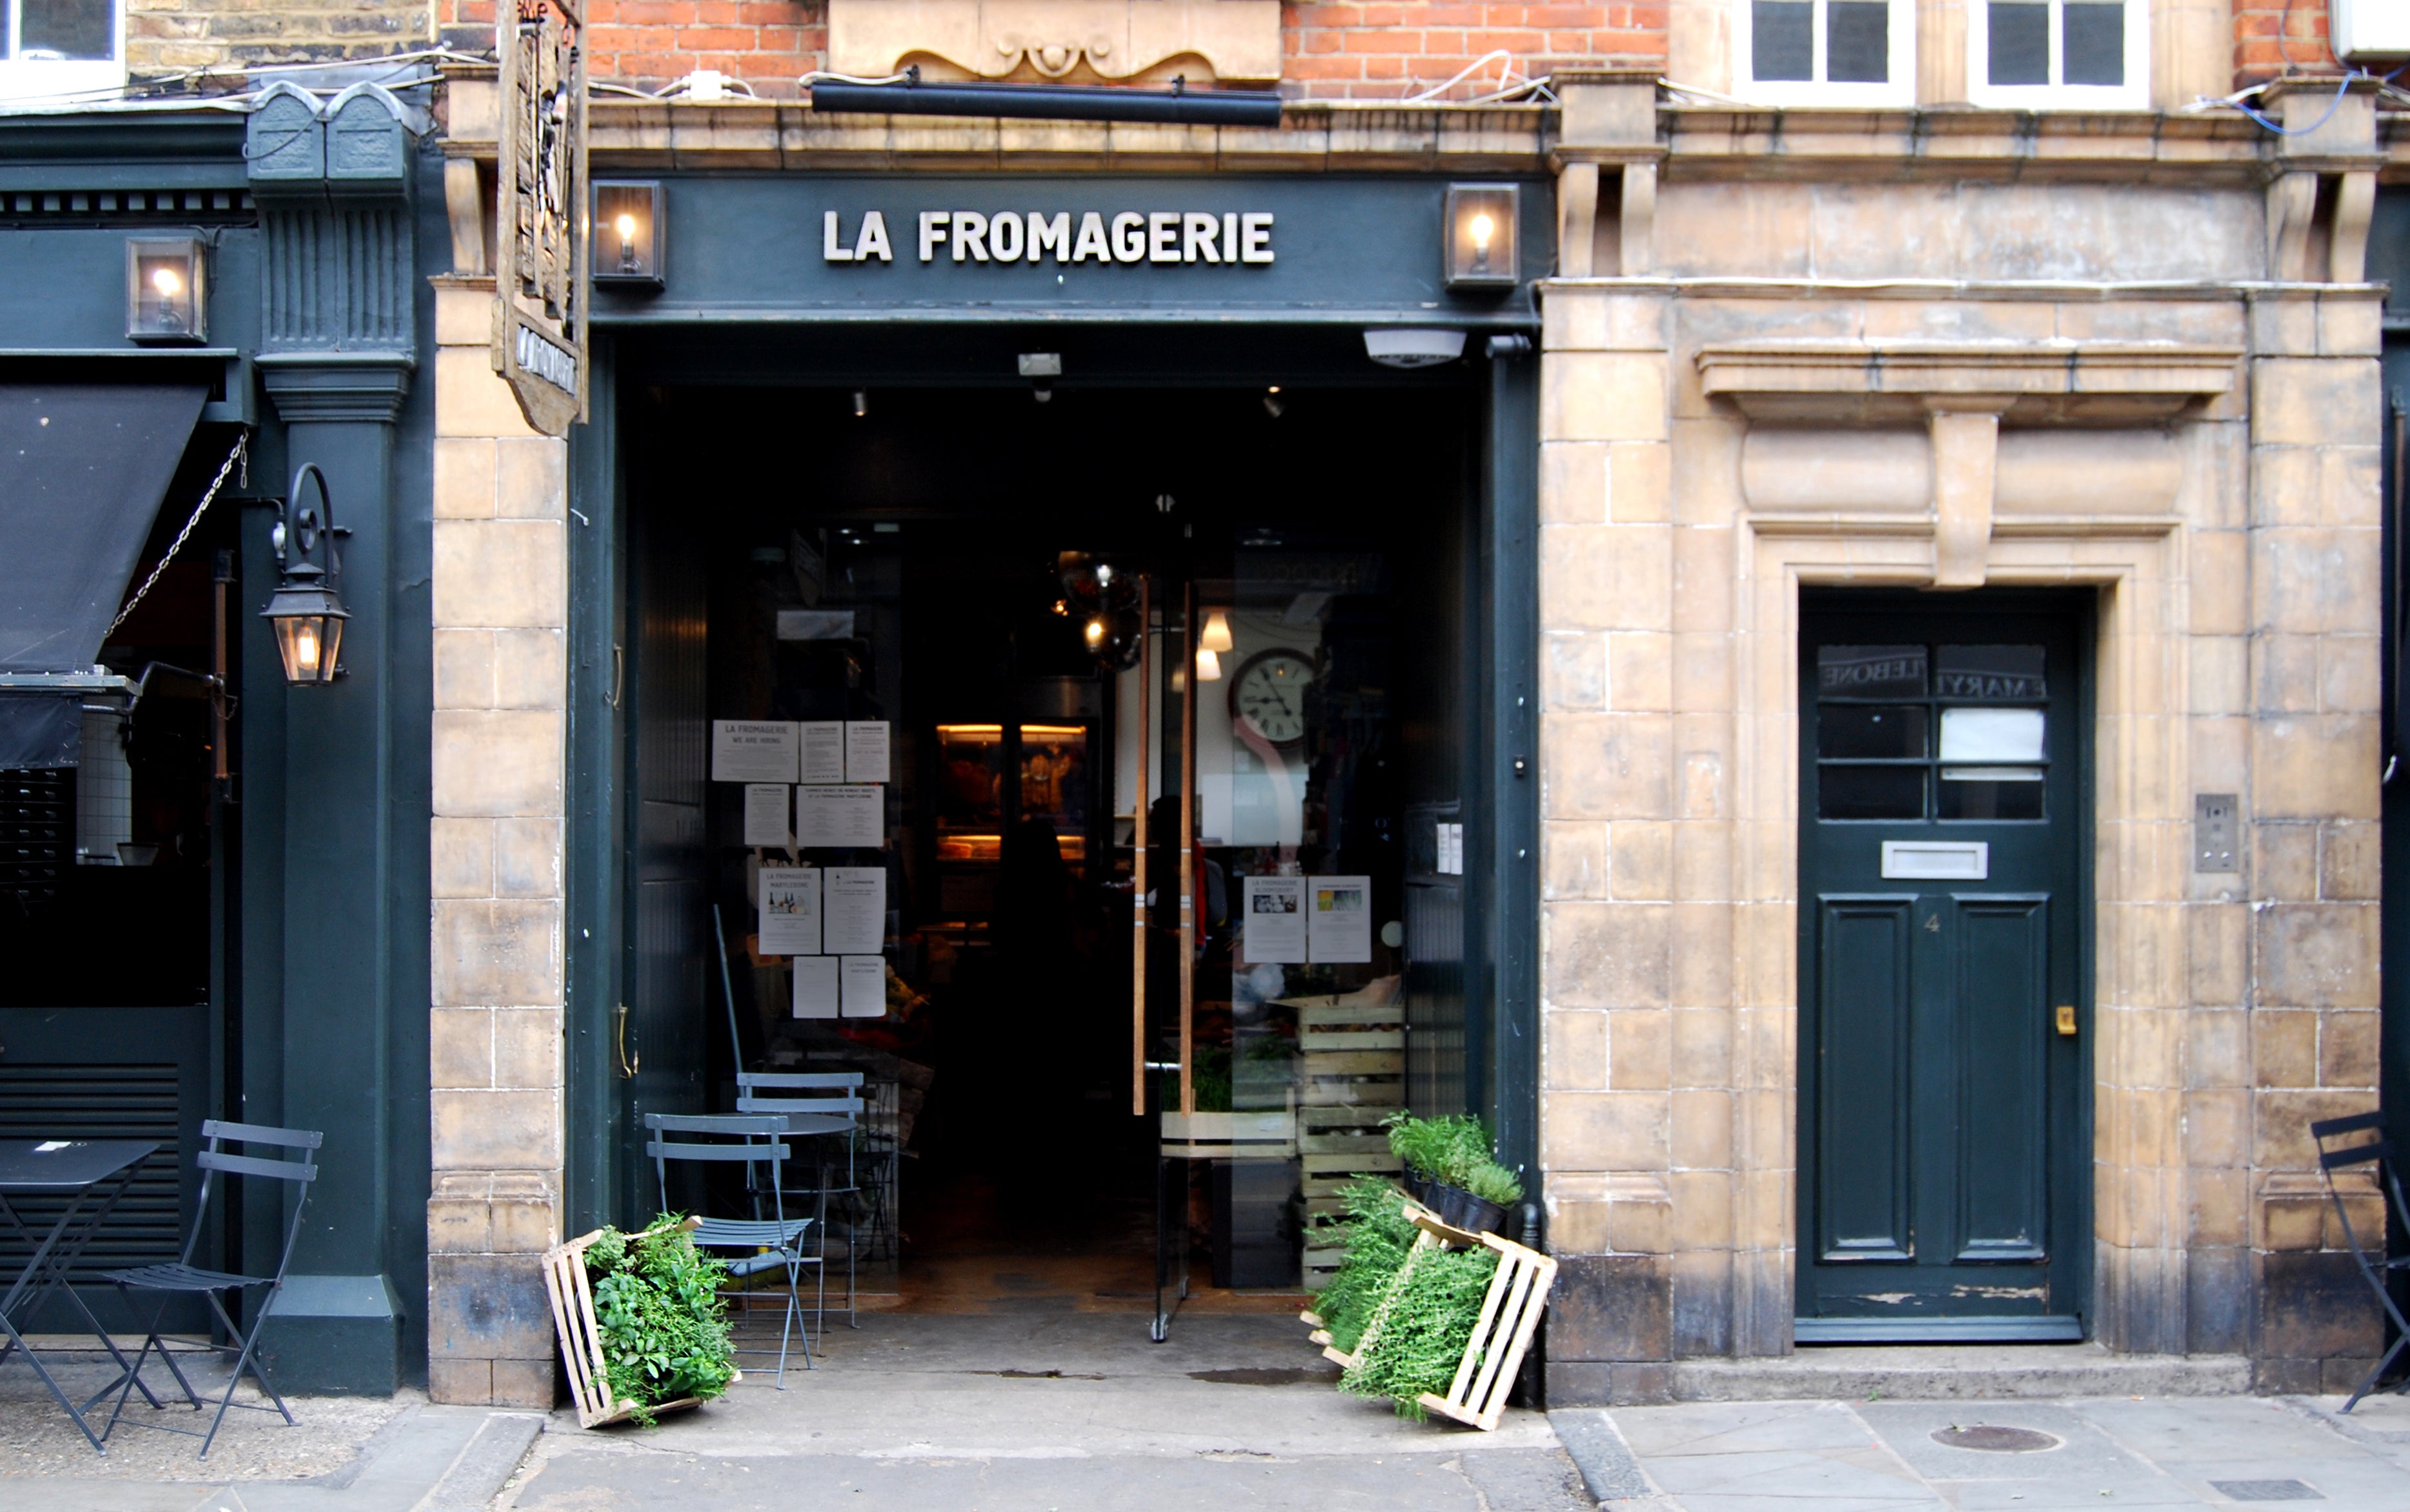 La Fromagerie Marylebone shop front